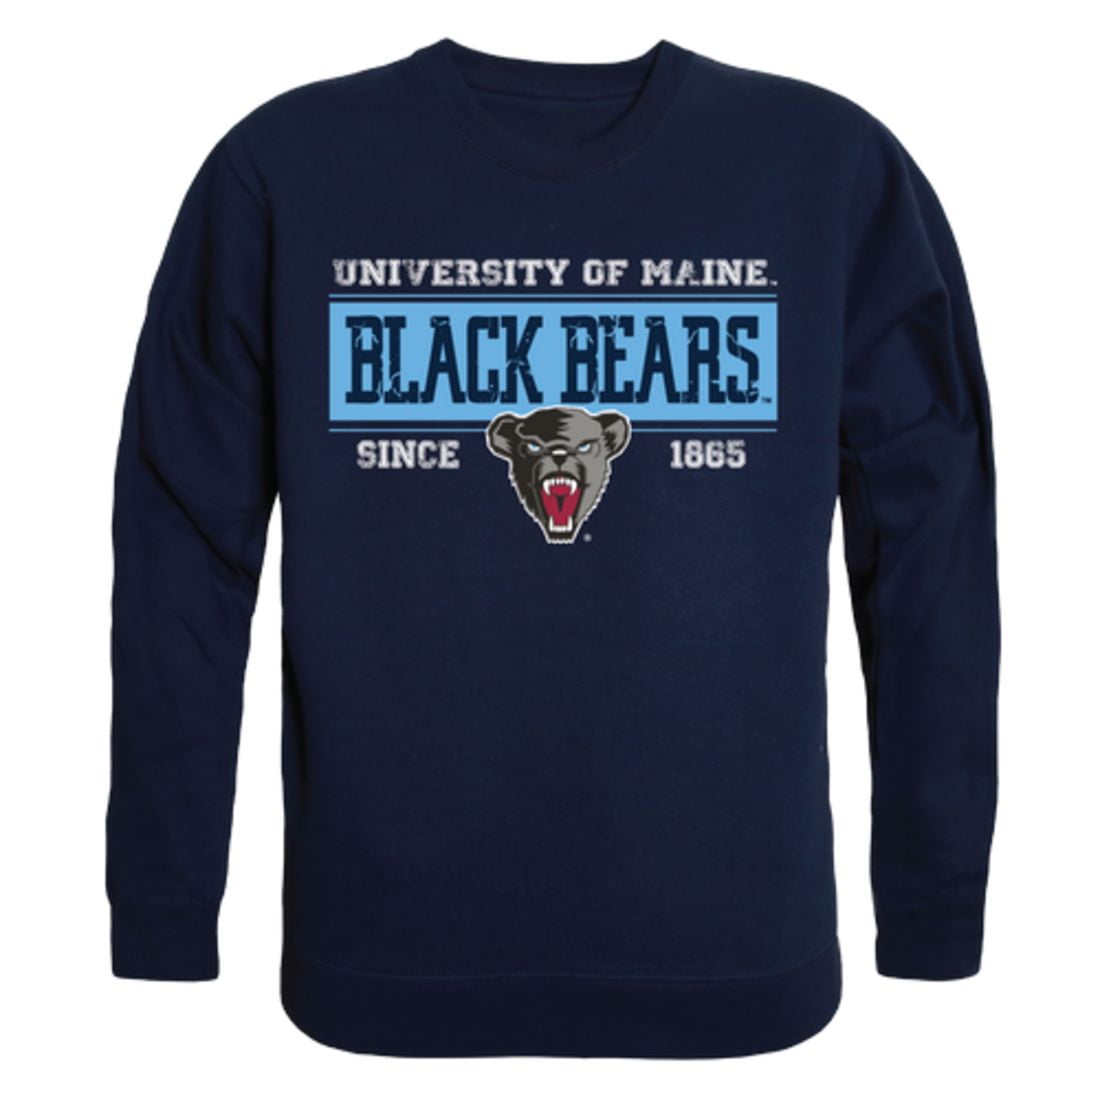 W Republic UMaine University of Maine Black Bears Established Crewneck Pullover Sweatshirt Sweater Navy